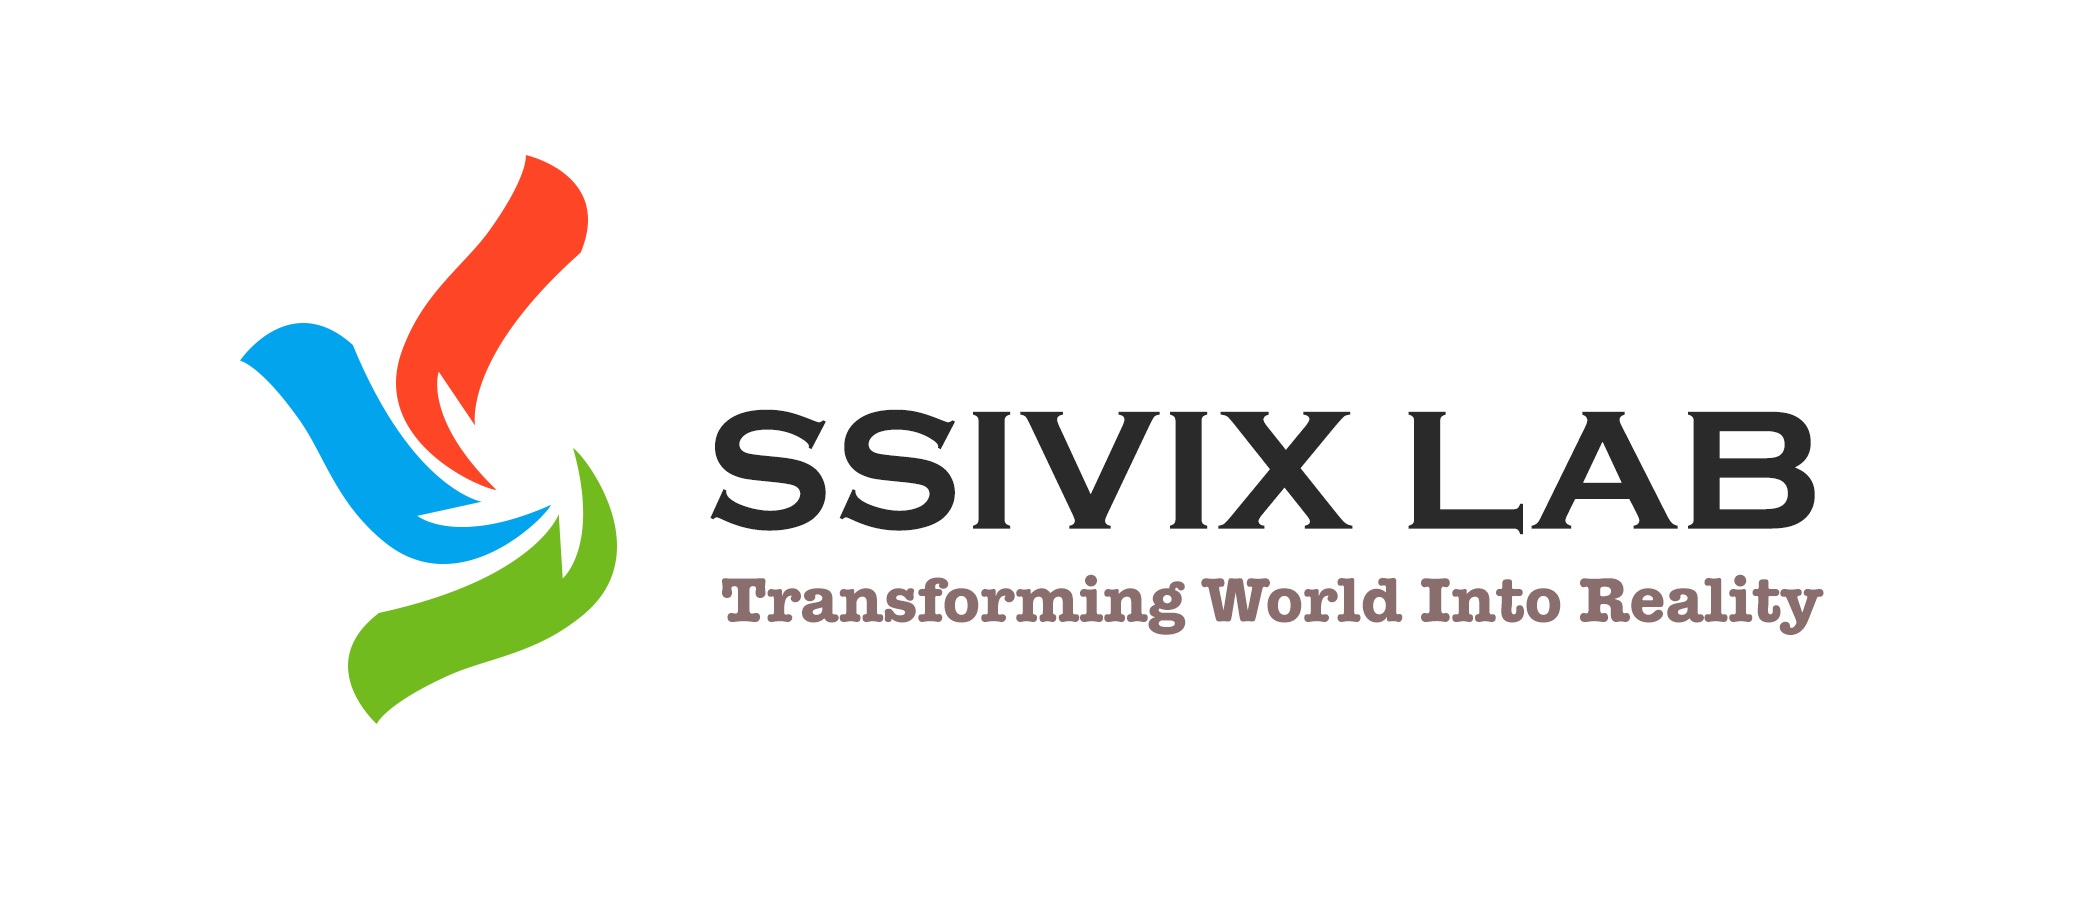 SSIVIX Lab’s MyCLNQ One-Stop Digital Health App Serves The Community Amid Covid-19